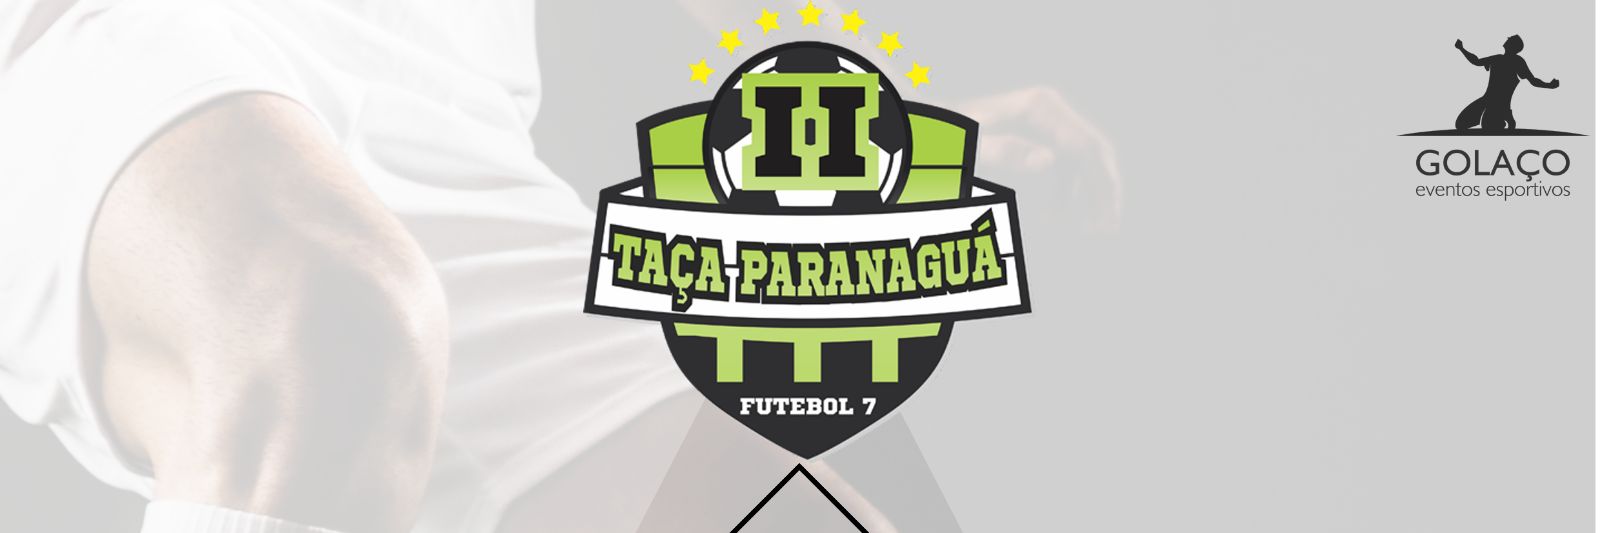 II Taça Paranaguá 2019 